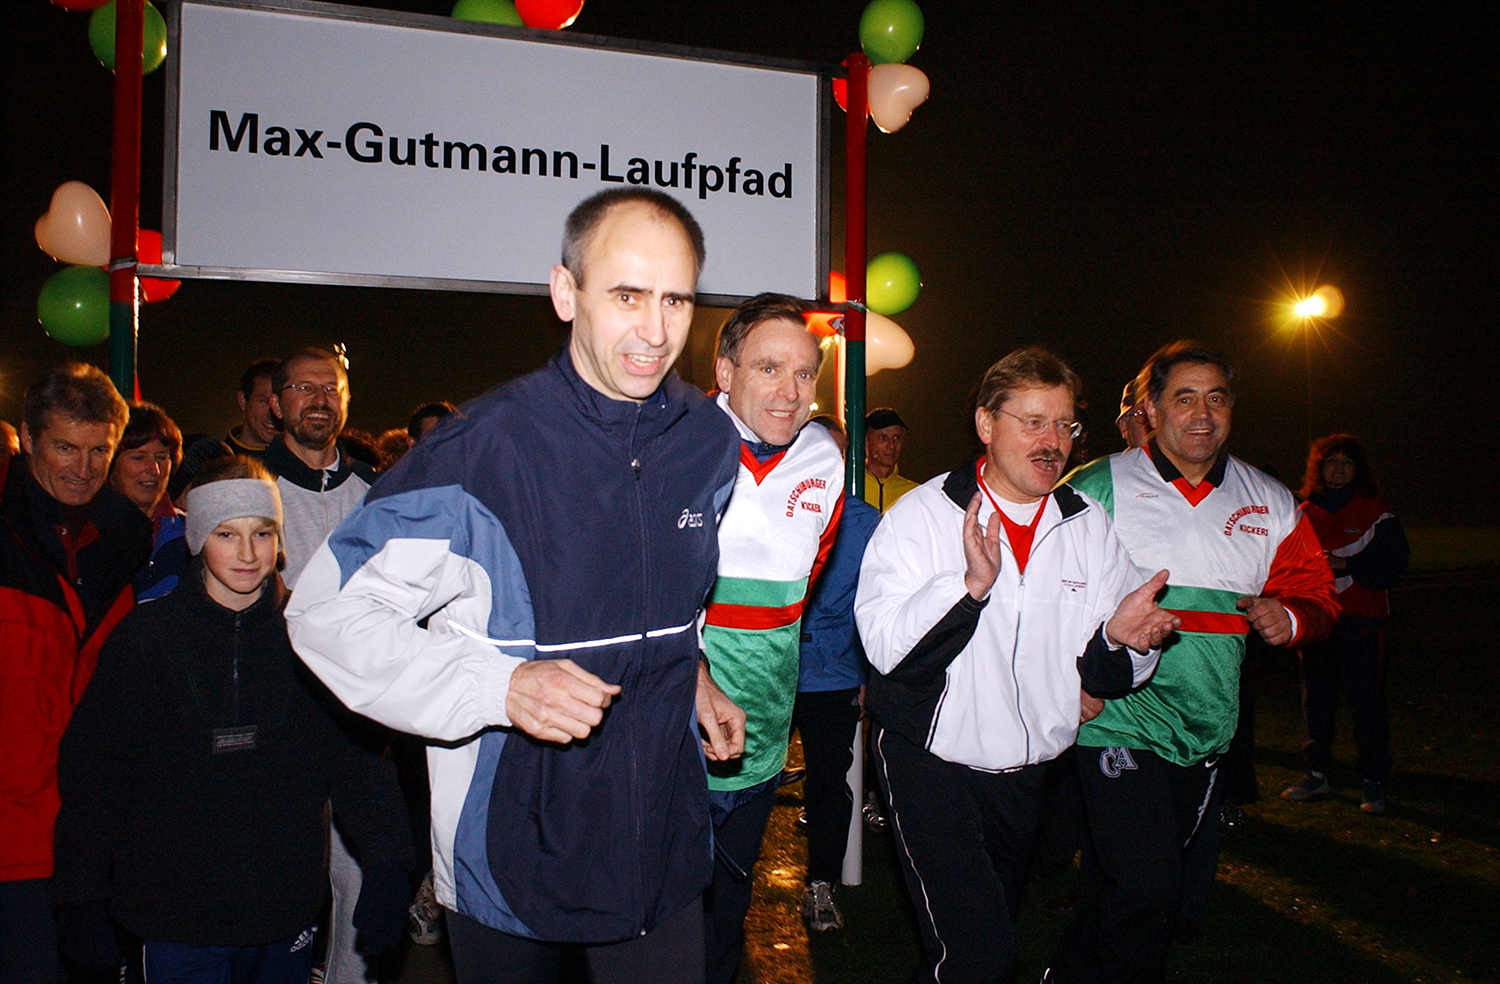 Max-Gutmann-Laufpfad